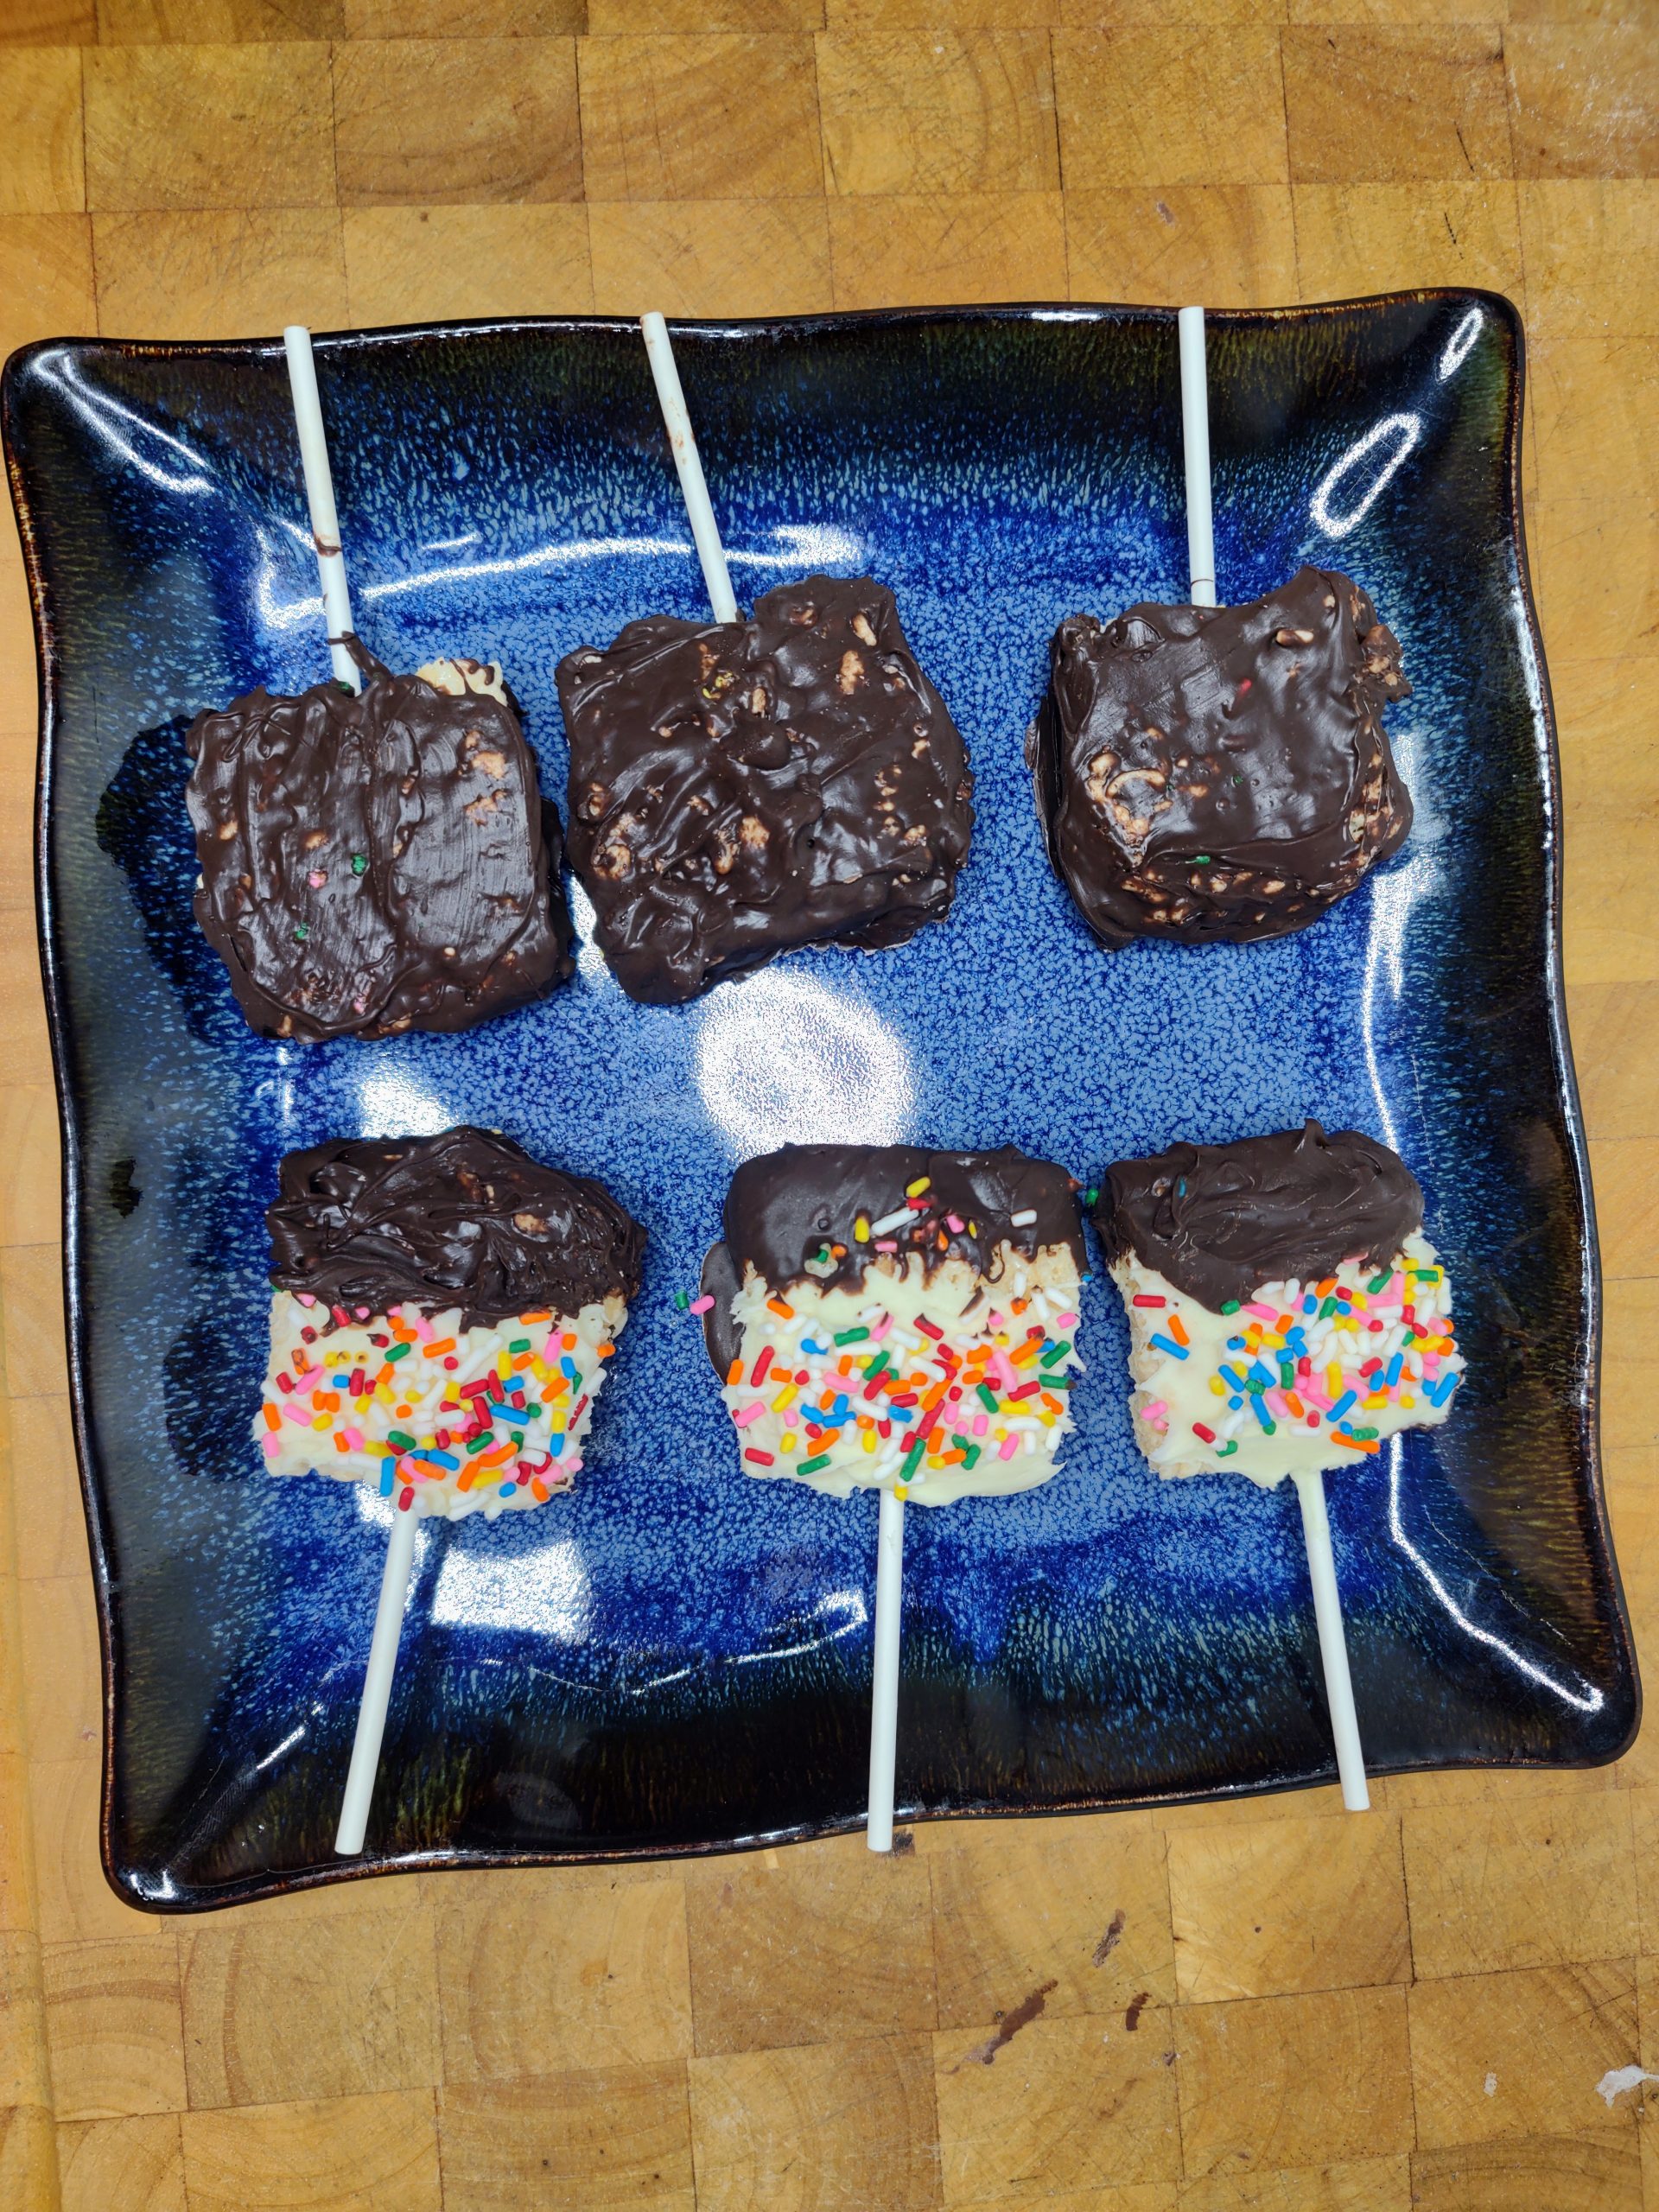 blue plate with six chocolate dipped ricr krispie treats